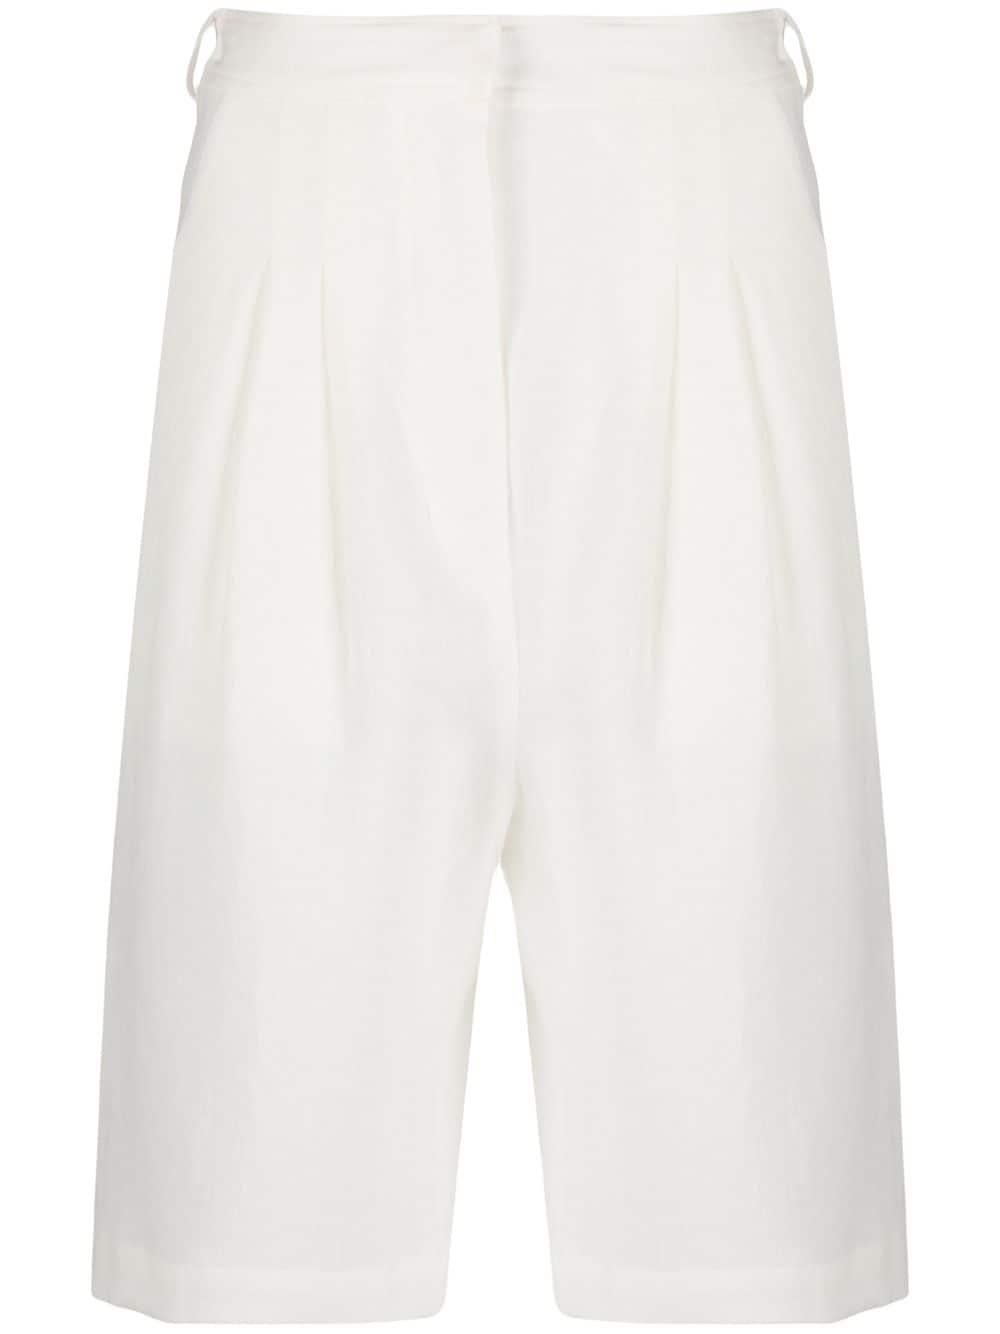 Le Kasha Linen Samalut High Waisted Shorts in White - Lyst